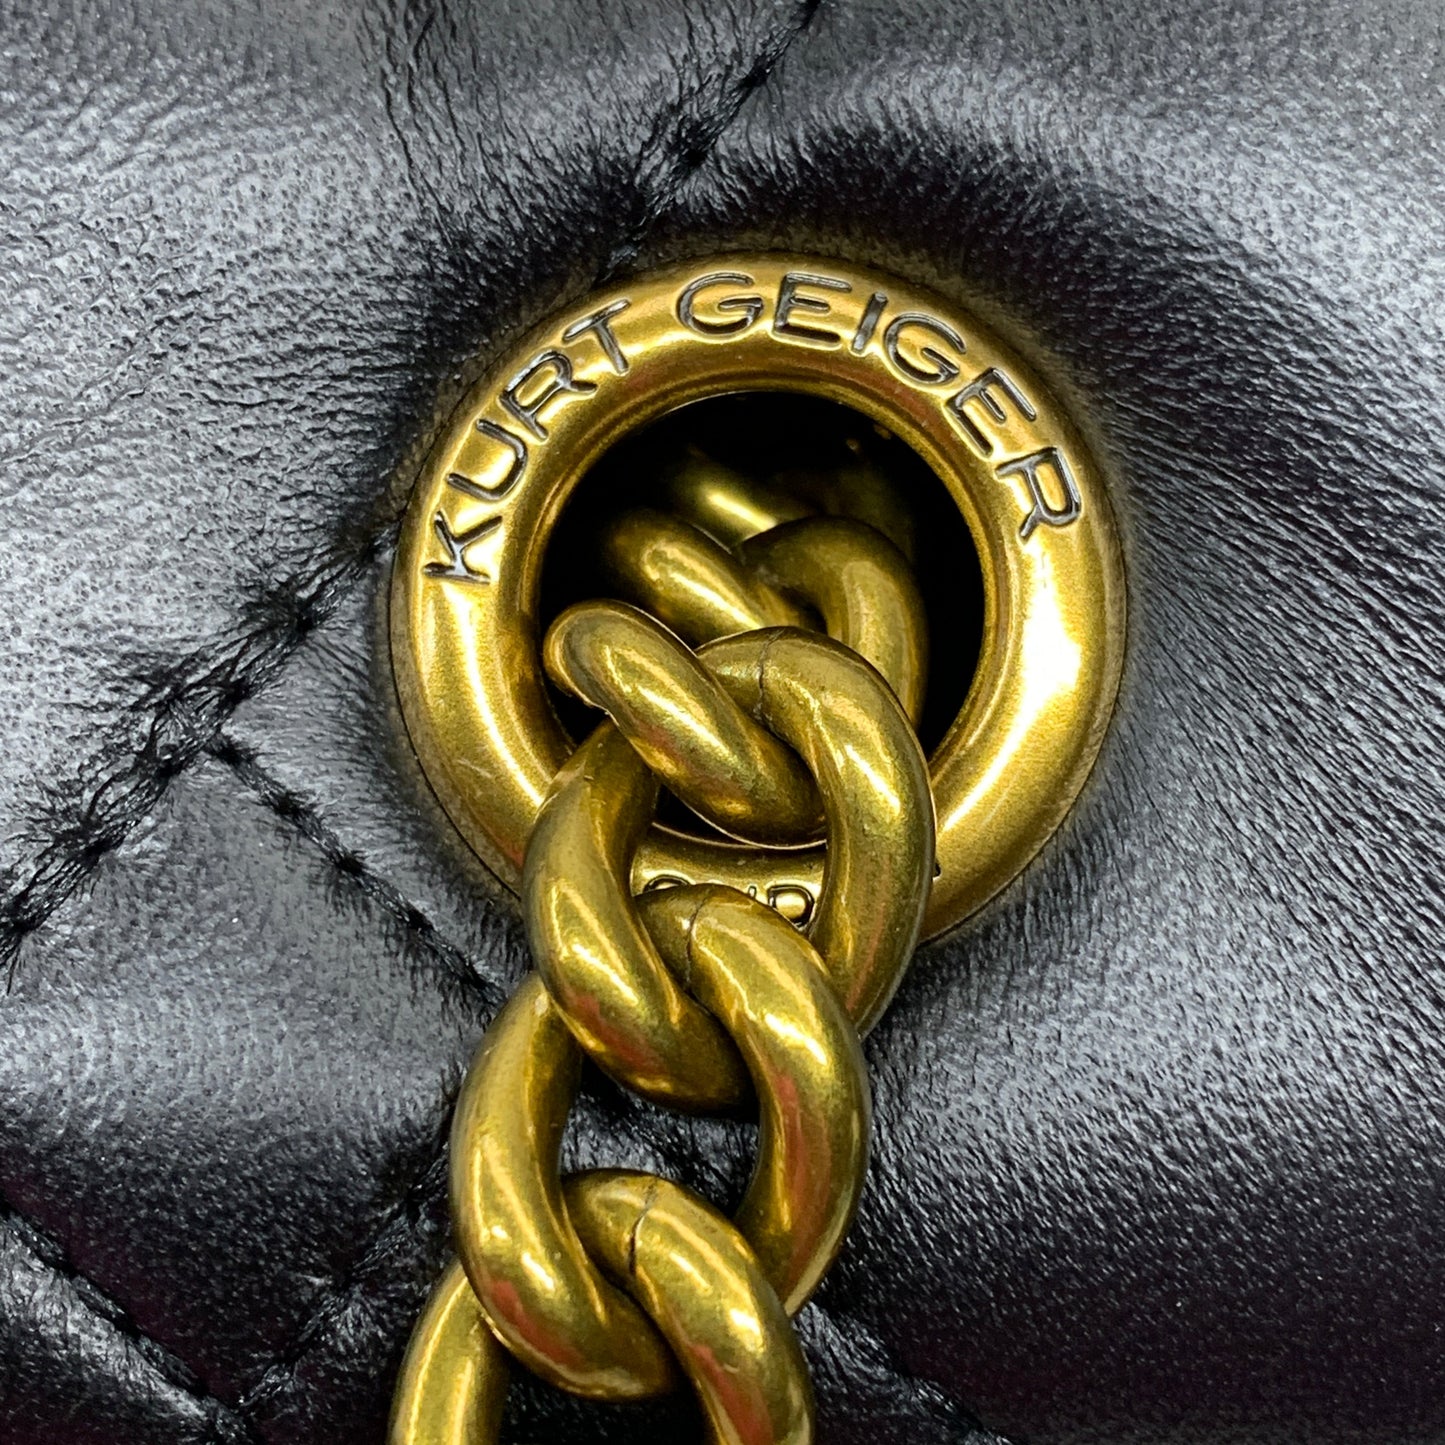 KURT GEIGER Kensington Soft Leather XXL Bag 15" x 9" Black 4708500109 New